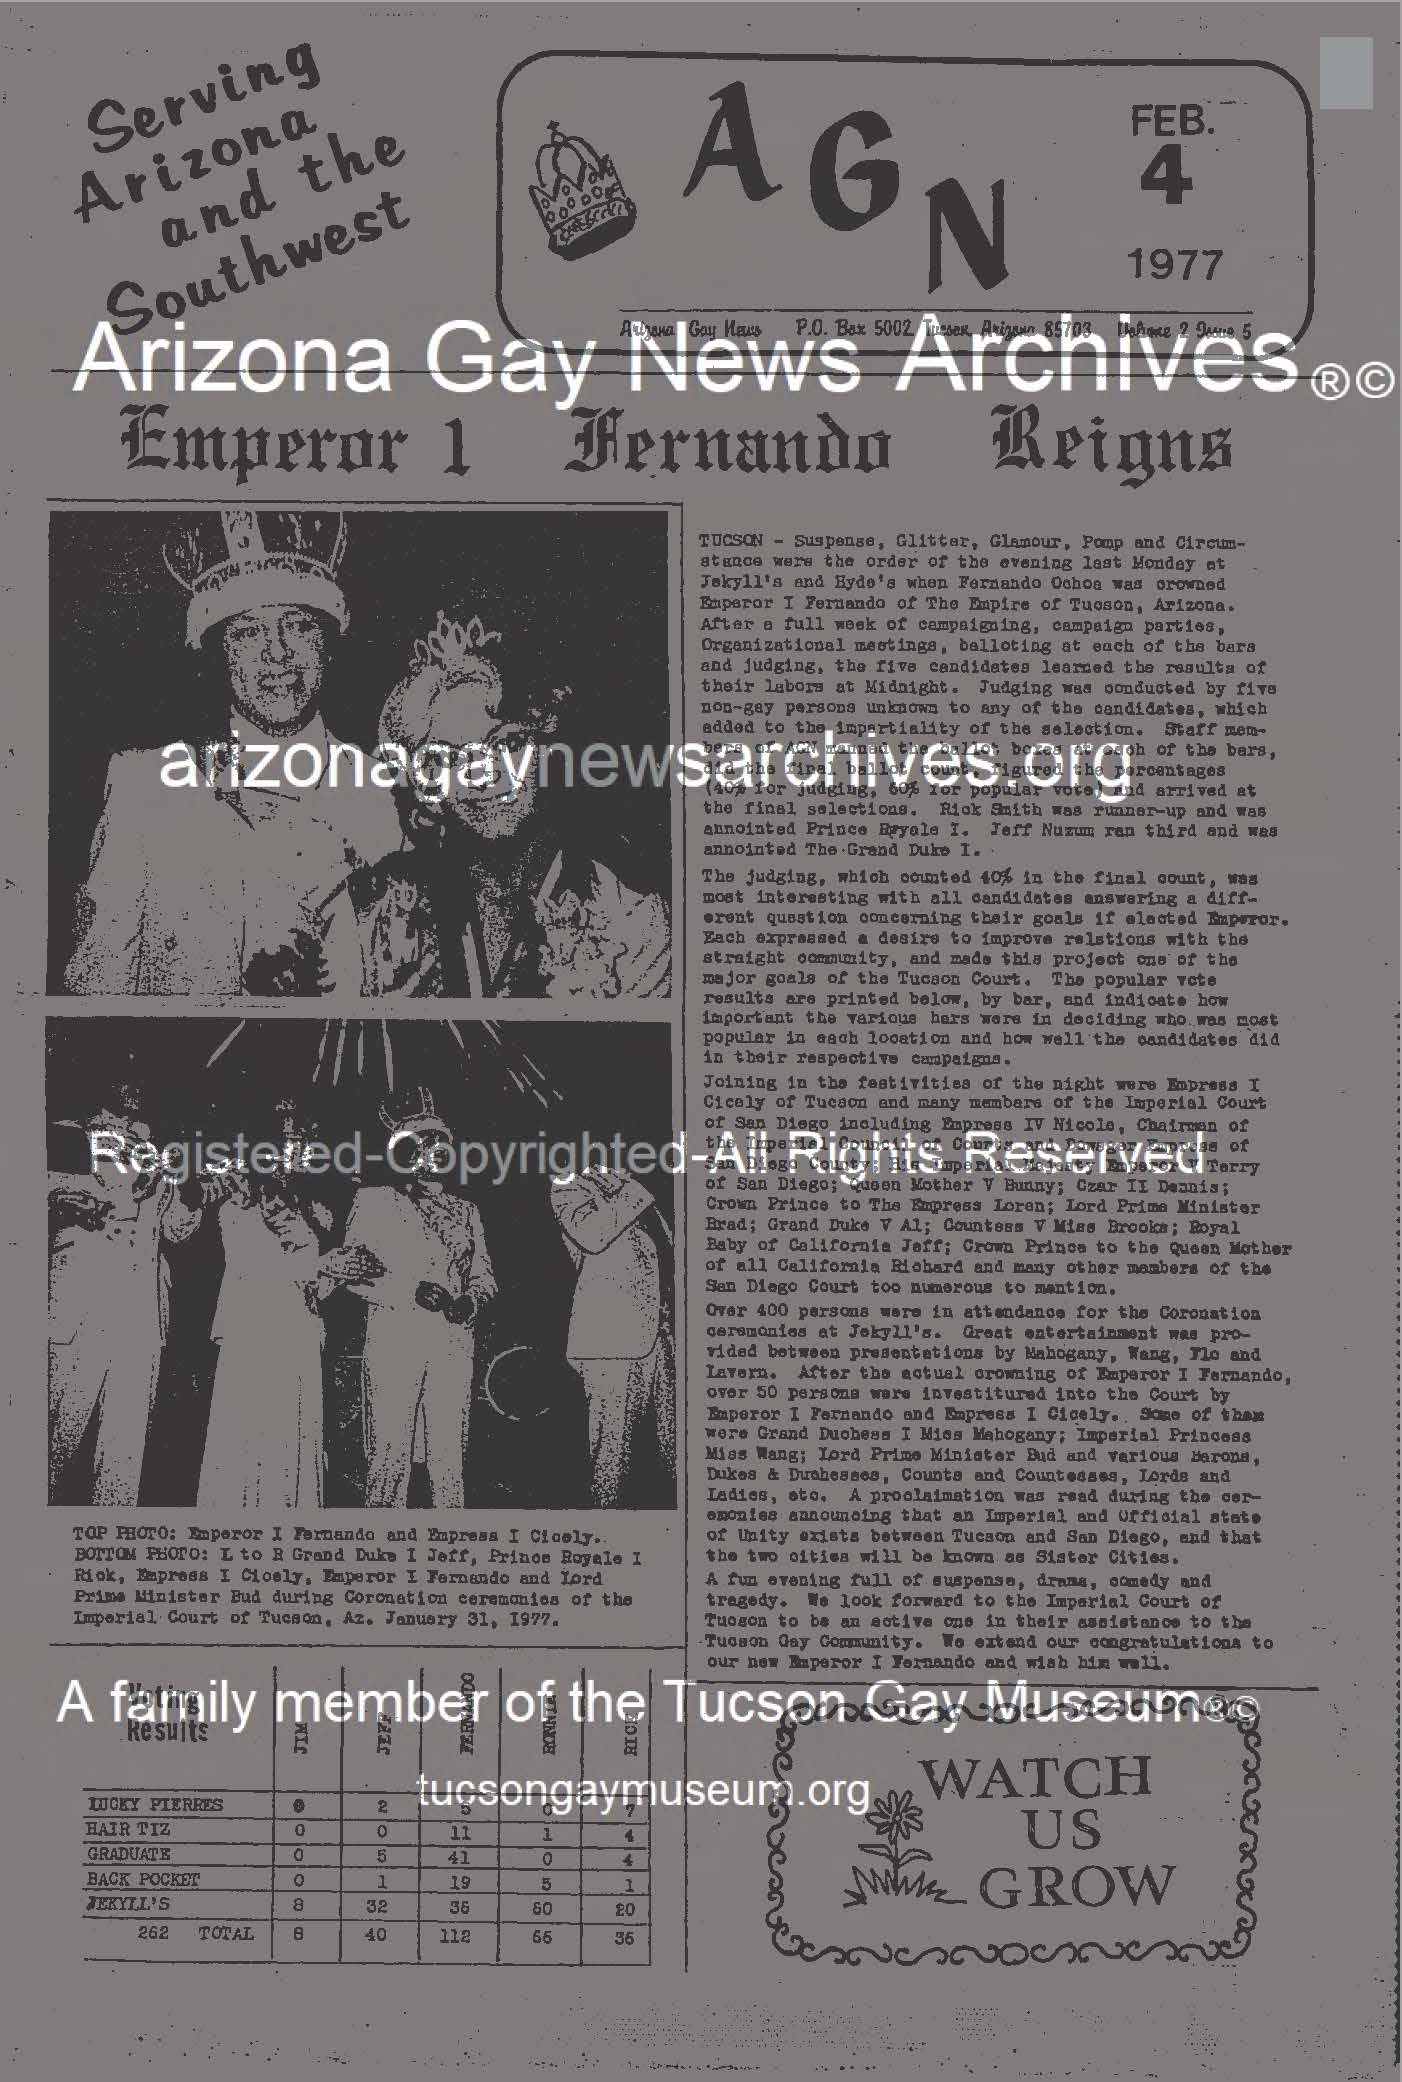 1977 Arizona Gay News Publication Issue Copyrighted Exhibit  